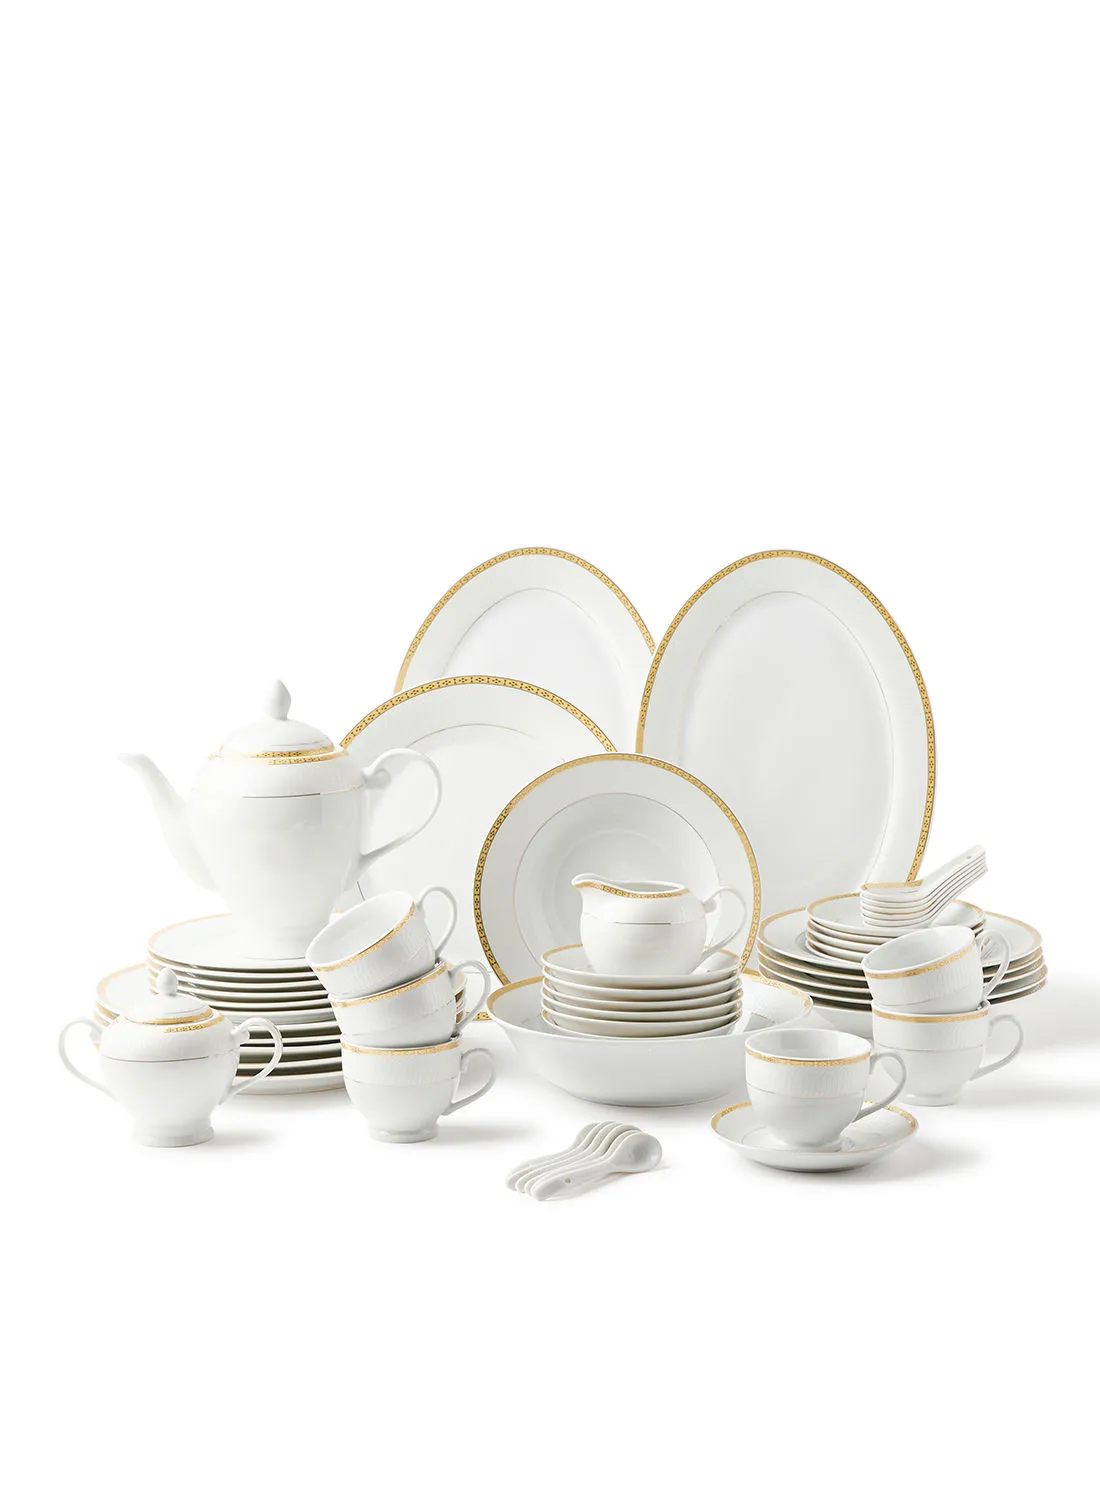 noon east 56 Piece Porcelain Dinner Set - Dishes, Plates - Dinner Plate, Side Plate, Bowl, Cups, Serving Dish And Bowl - Serves 6 - Festive Design White/Gold Elegance